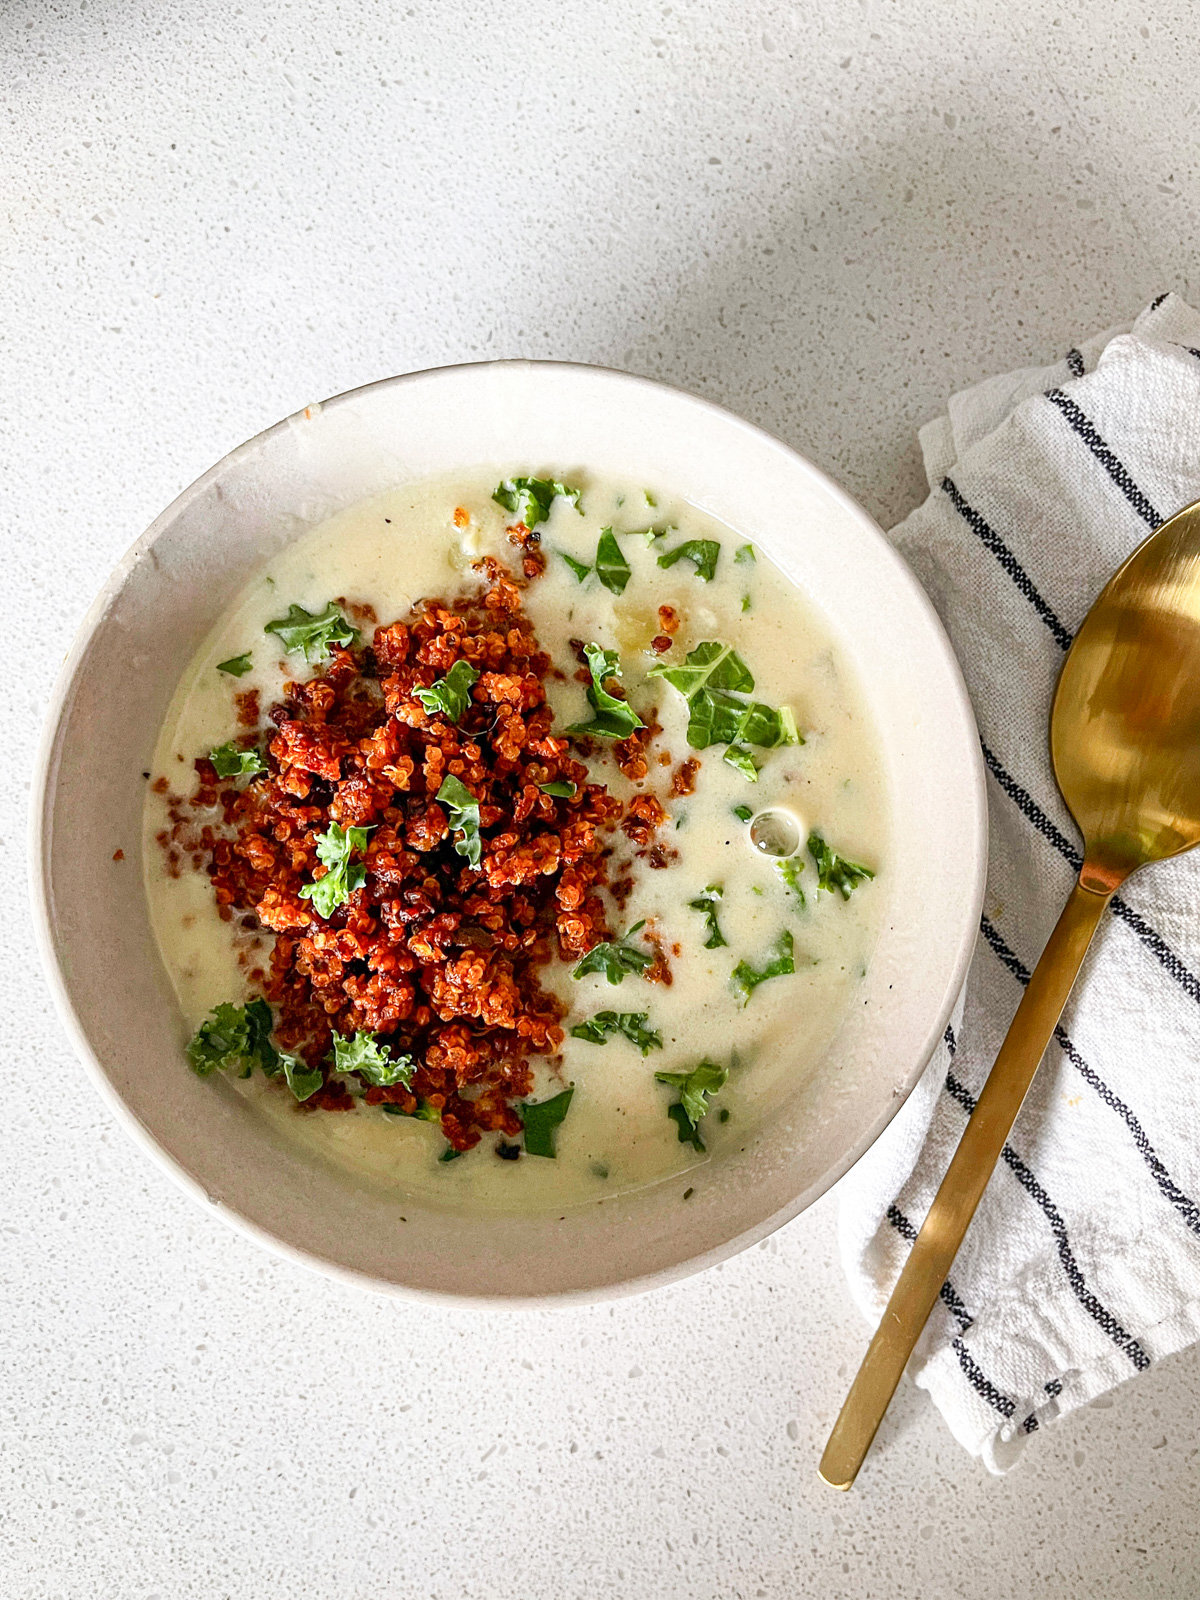 creamy vegan potato and kale soup with smoky quinoa